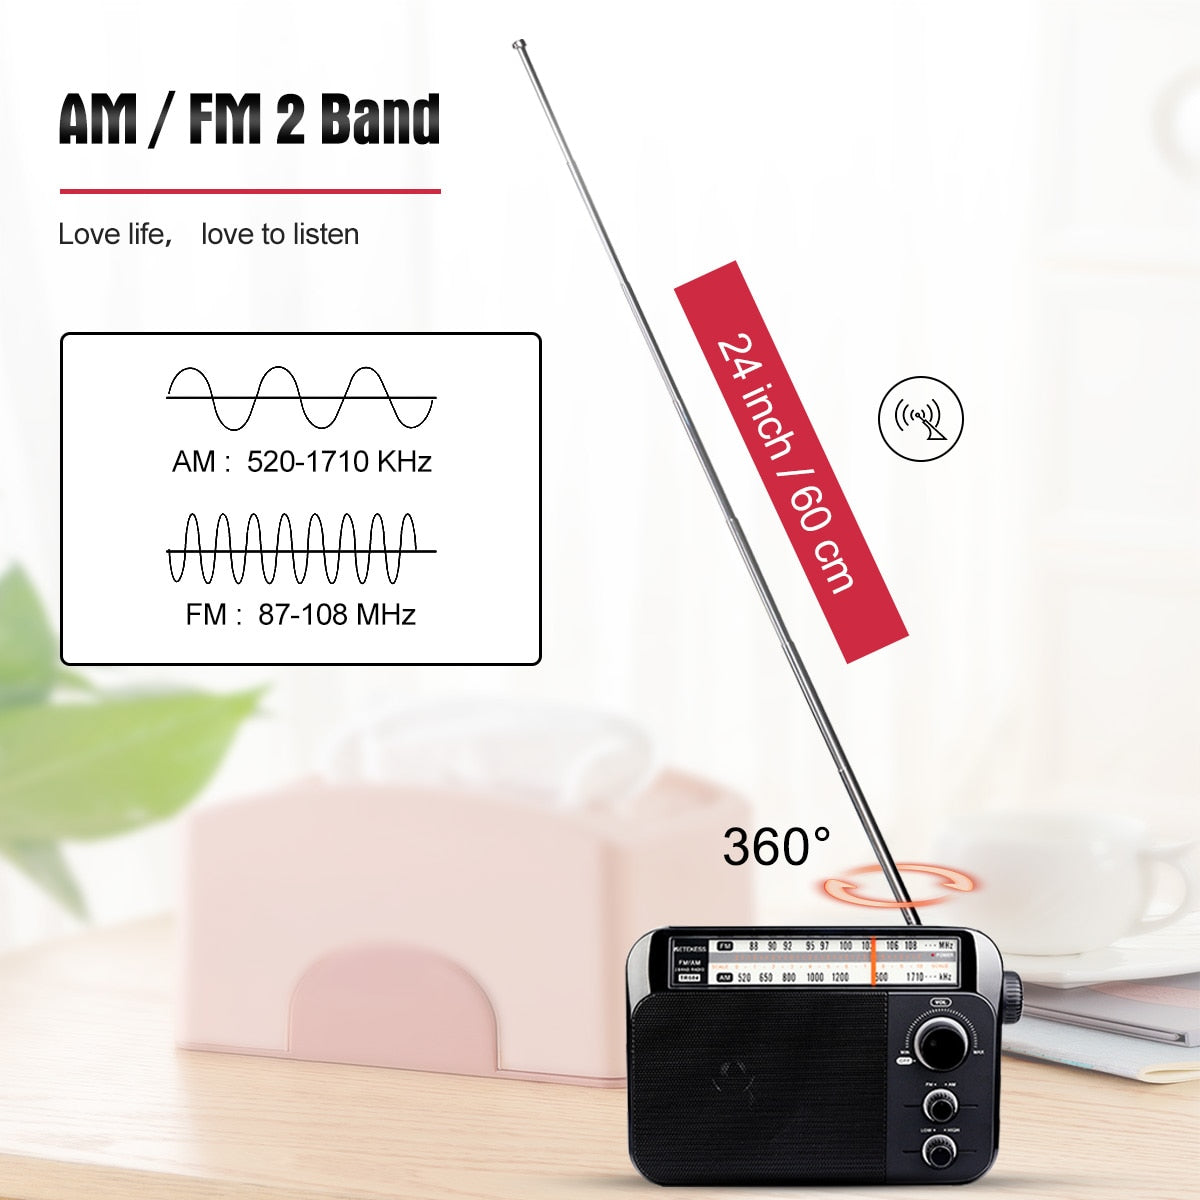 Retekess TR604 AM FM Radio Portable Plug in Radio Transistor Powered by 3 D Batteries or AC 110V/220V for Senior and Home